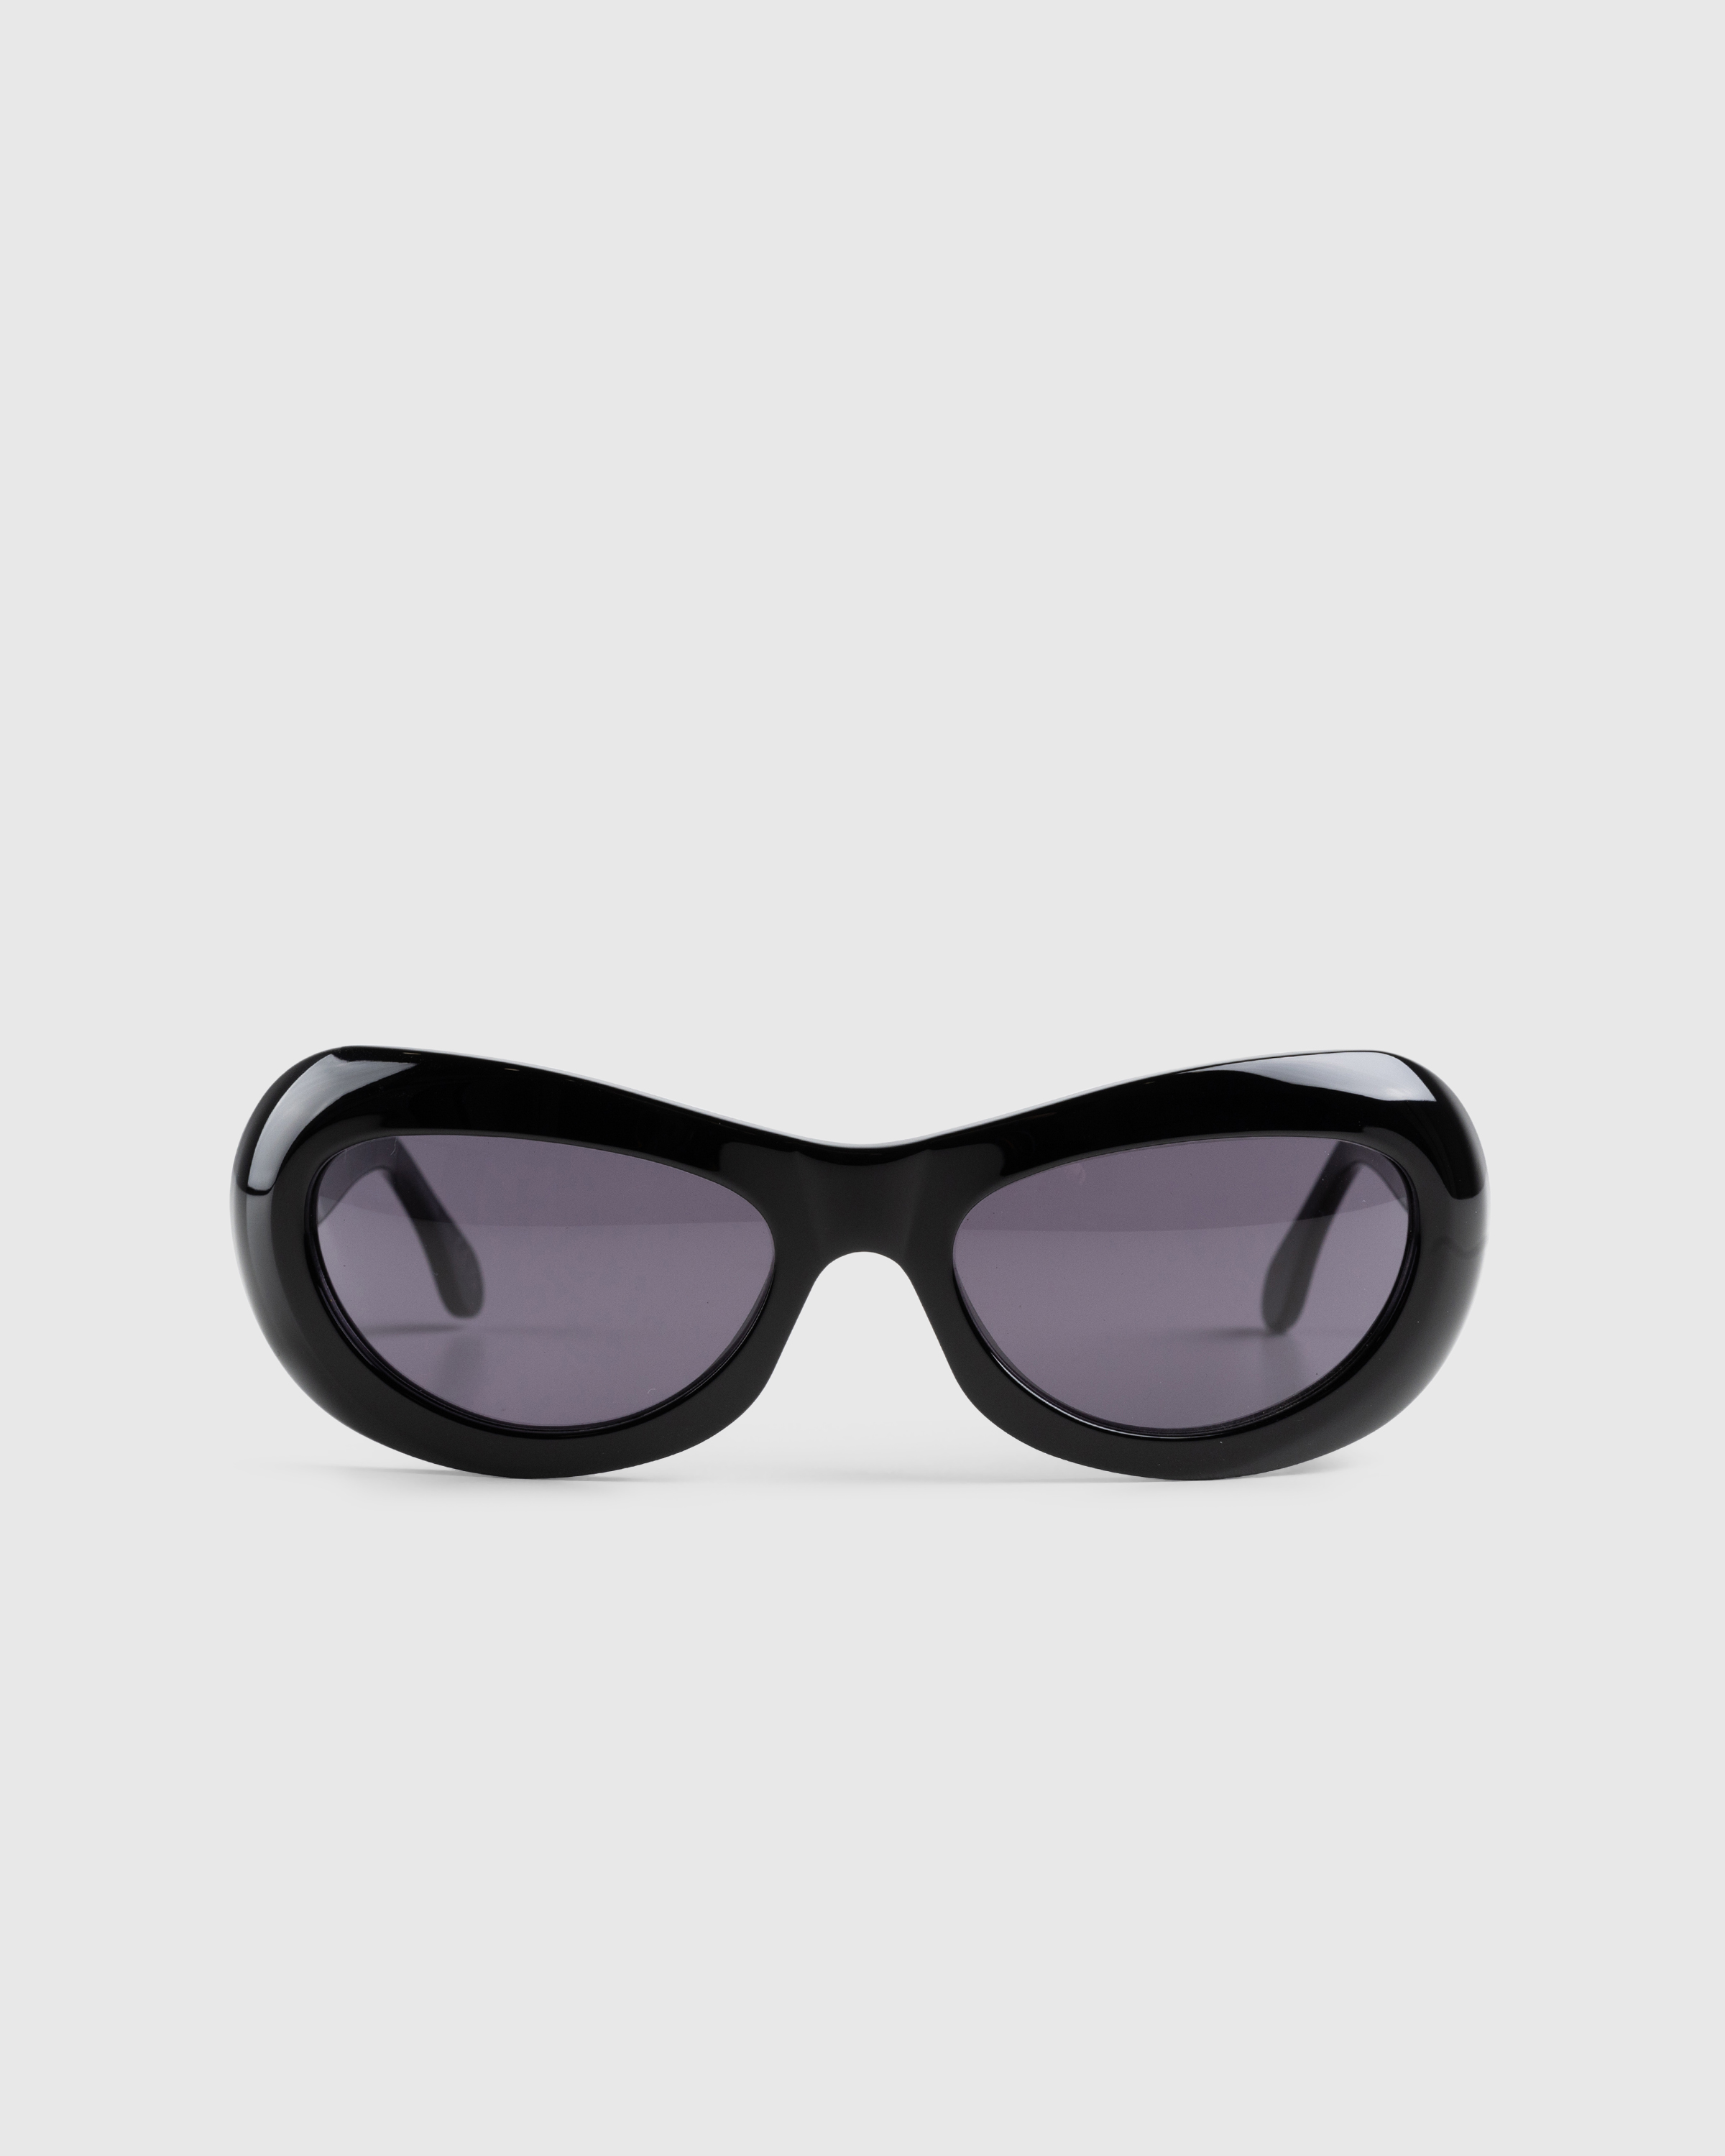 Marni x retrosuperfuture – Field Of Rushes Black - Sunglasses - Black - Image 1